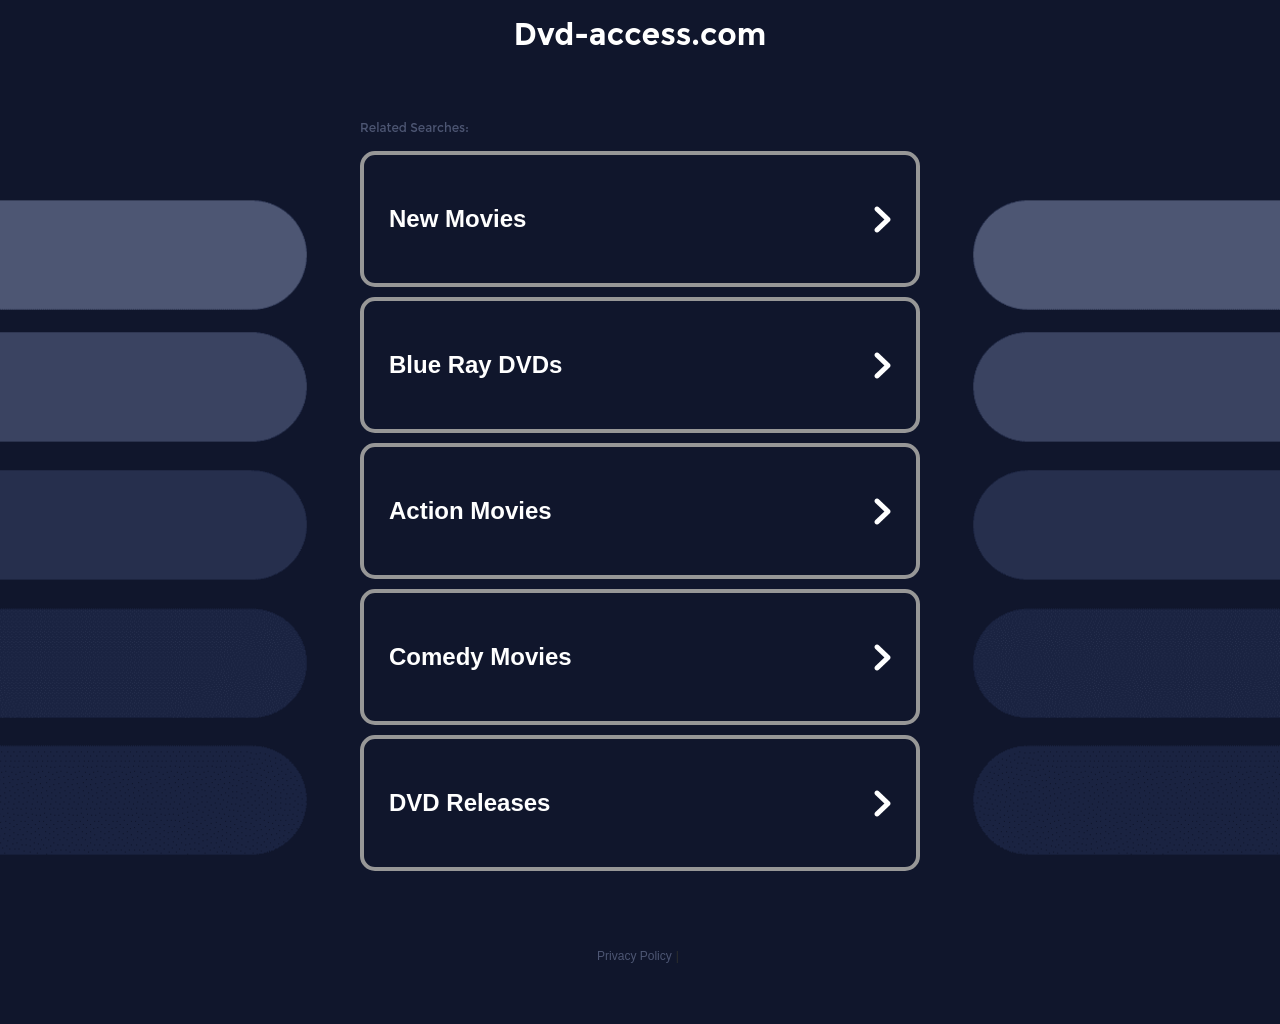 dvd-access.com